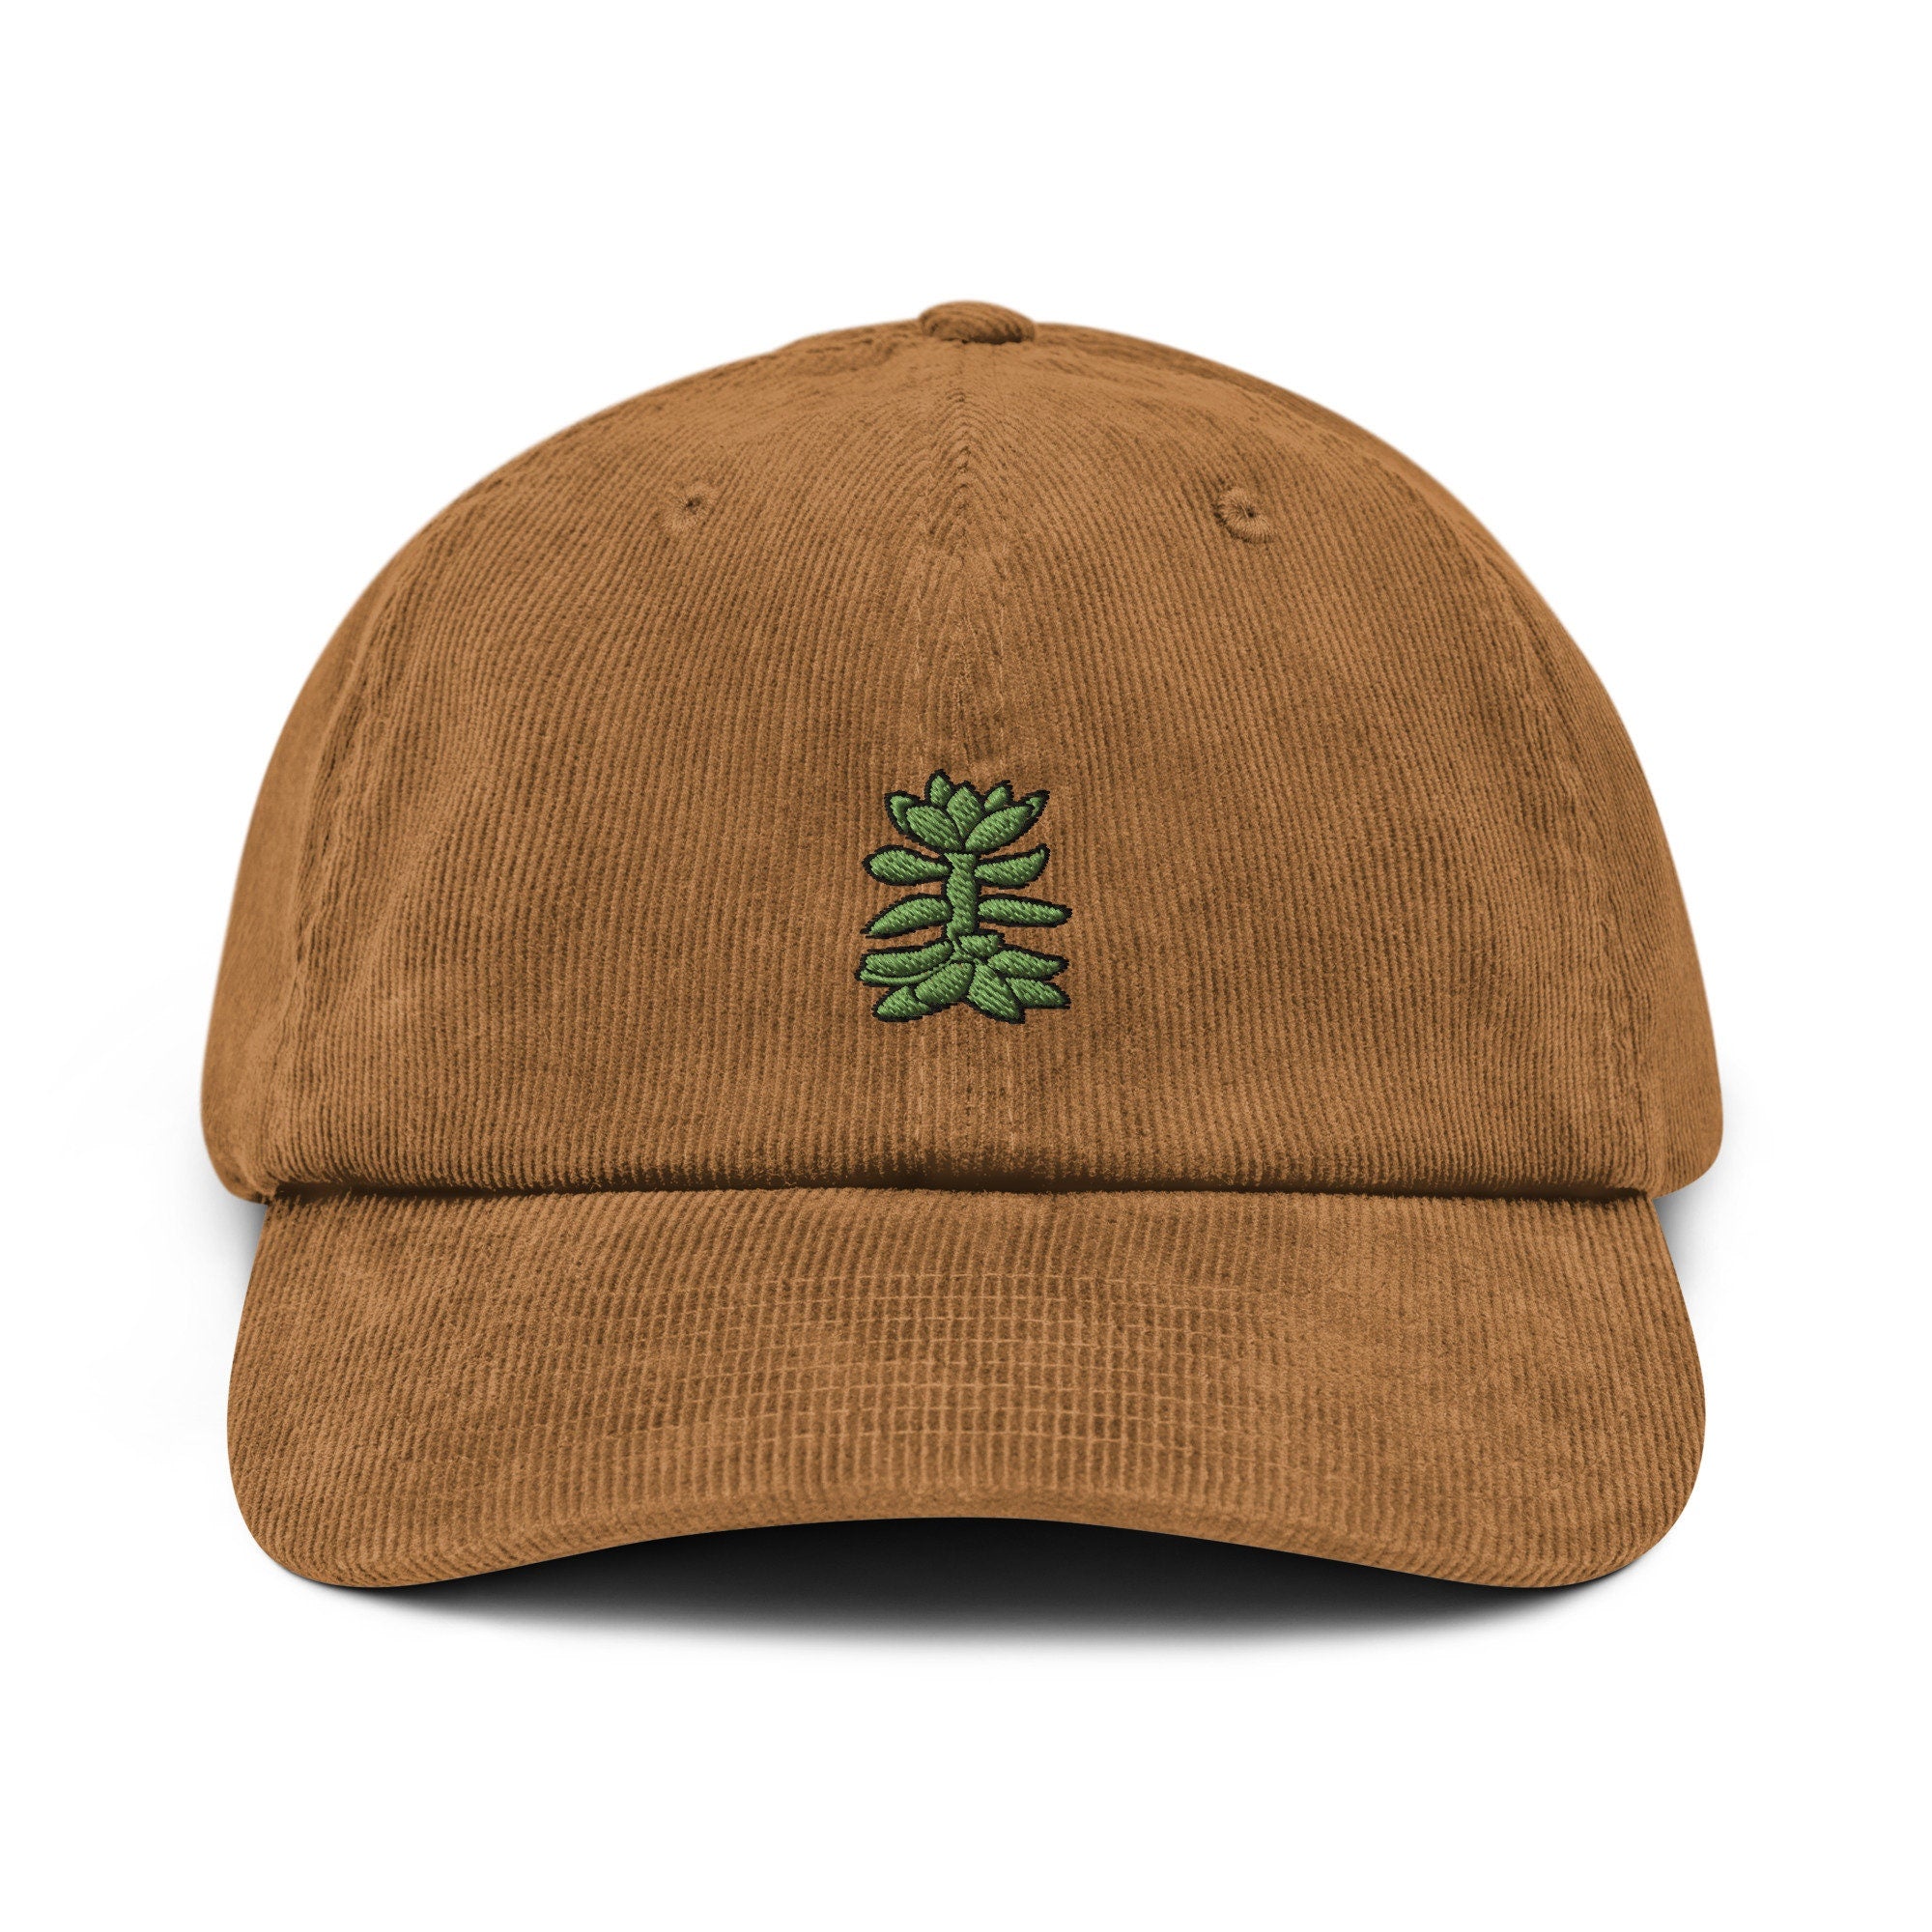 Succulent Corduroy Hat, Handmade Embroidered Corduroy Dad Cap - Multiple Colors